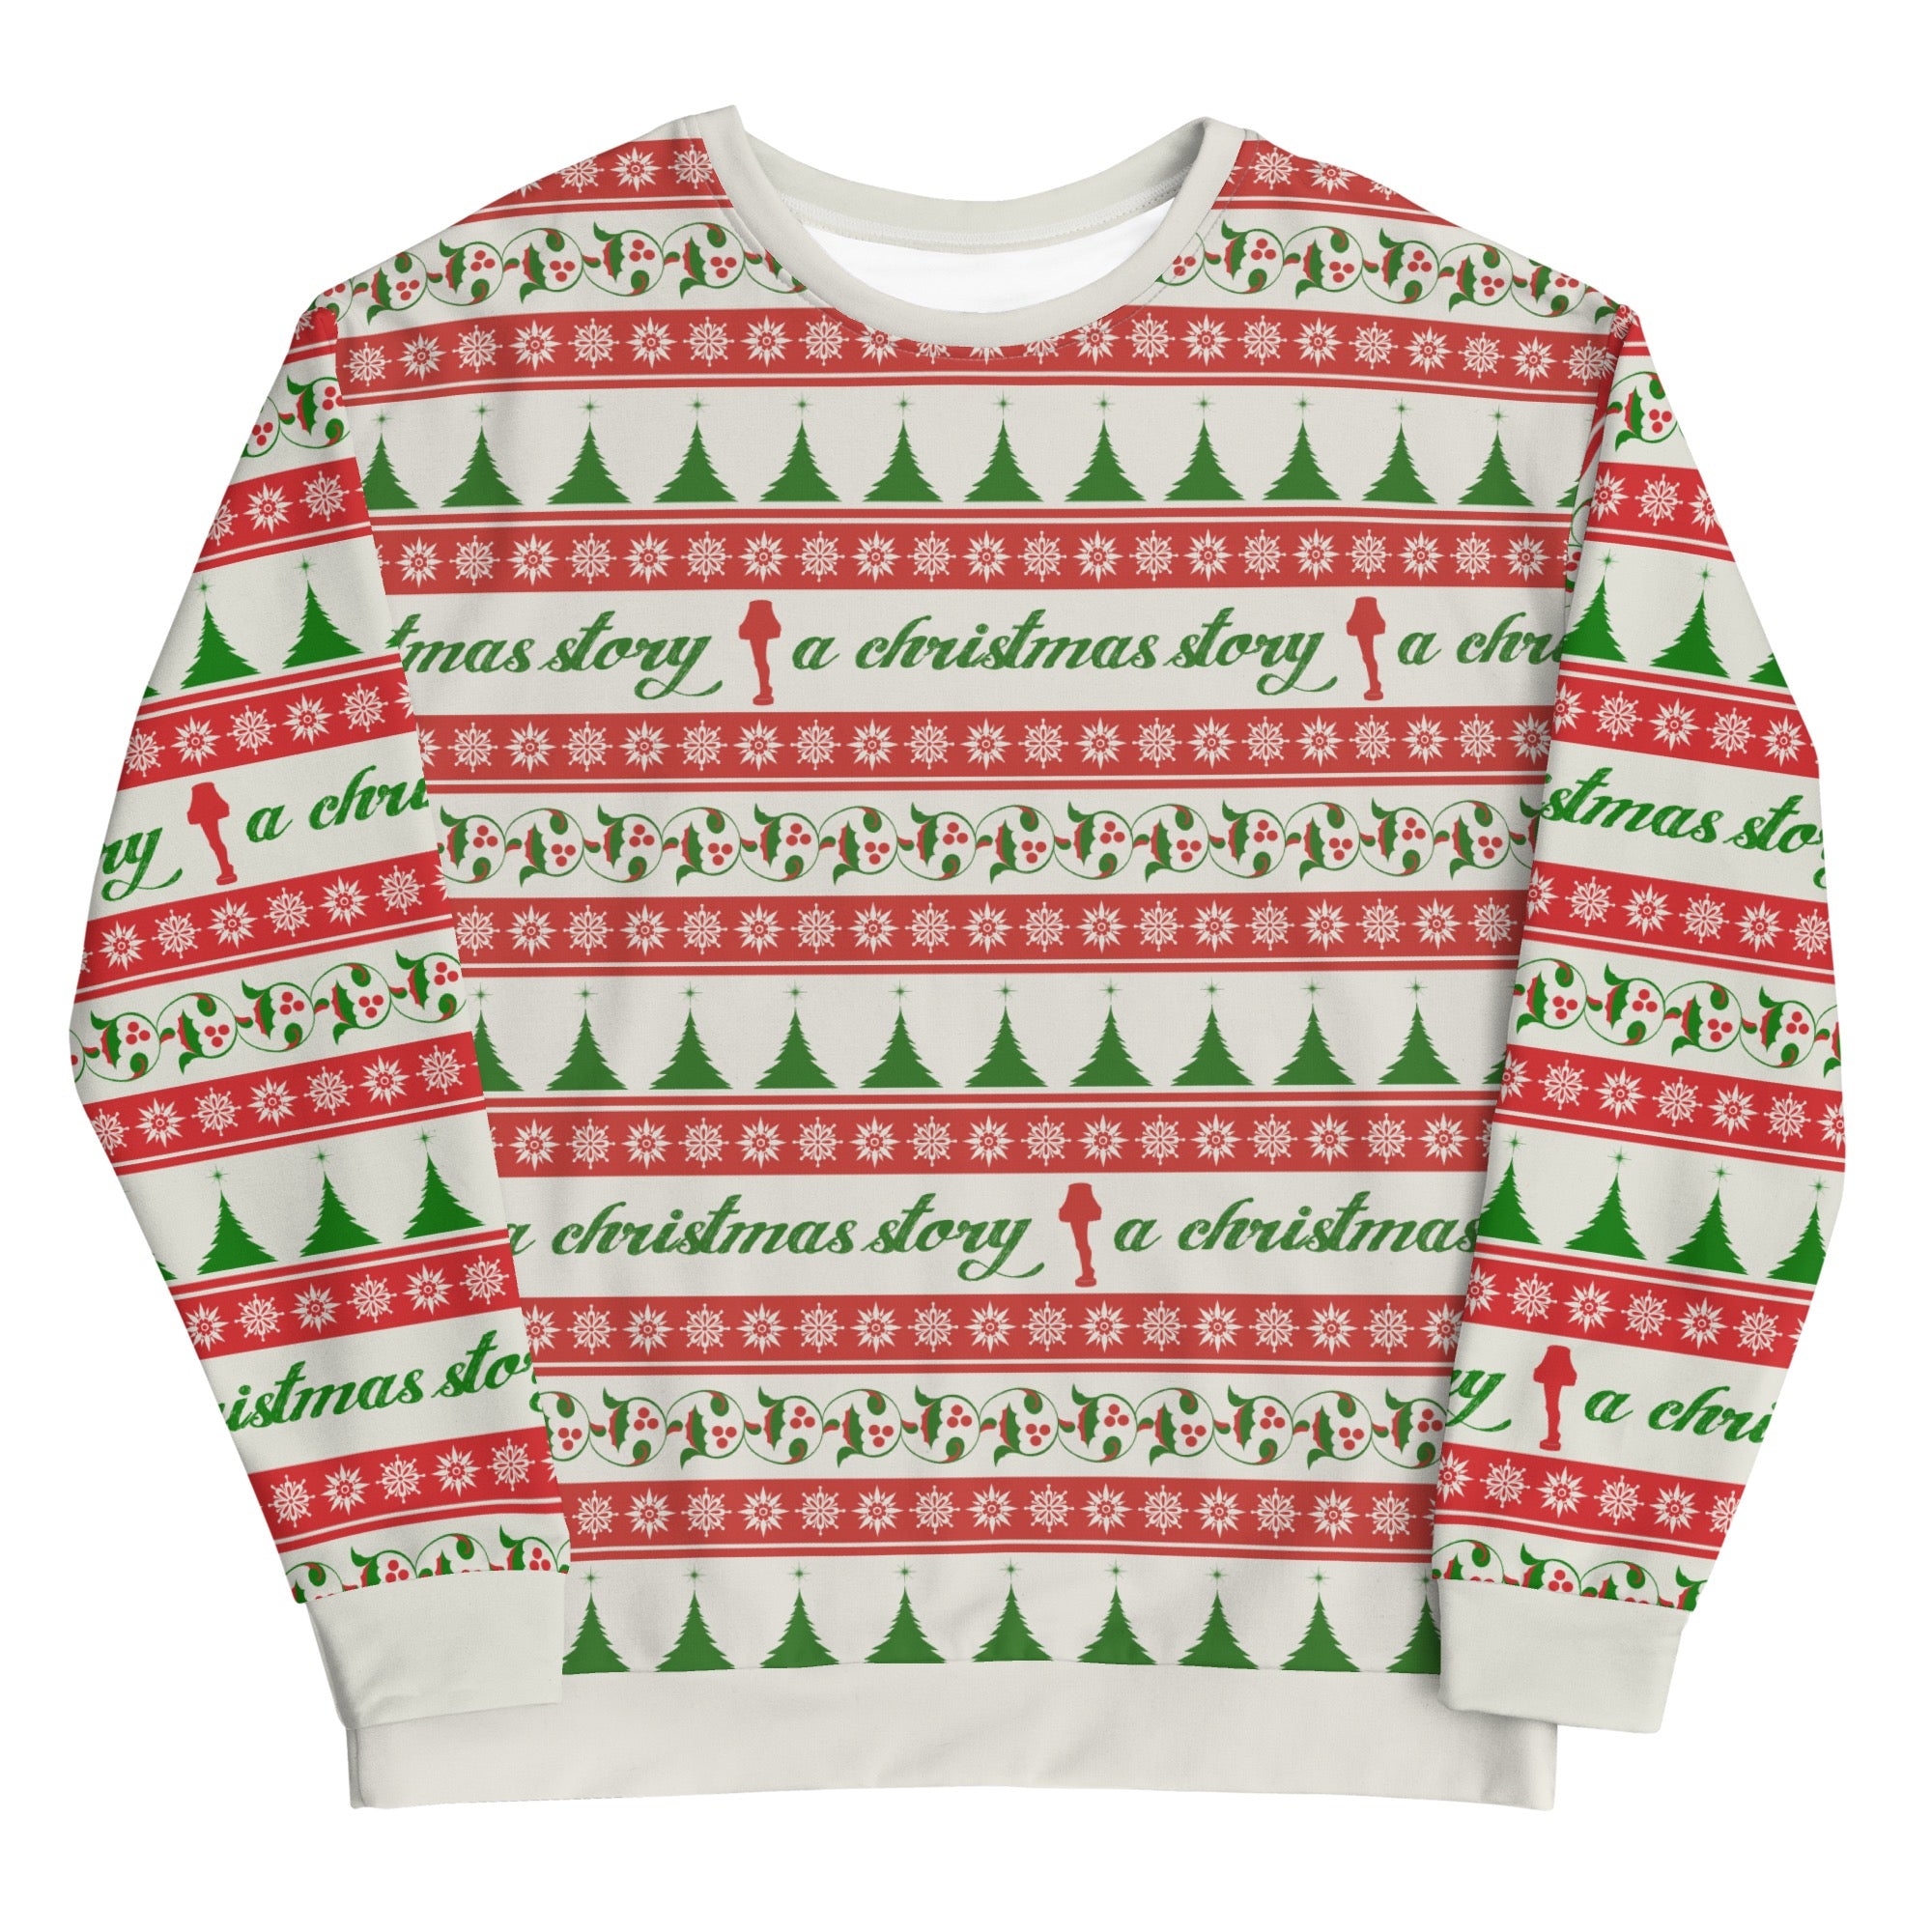 A Christmas Story Holiday Unisex Crew Neck Sweatshirt